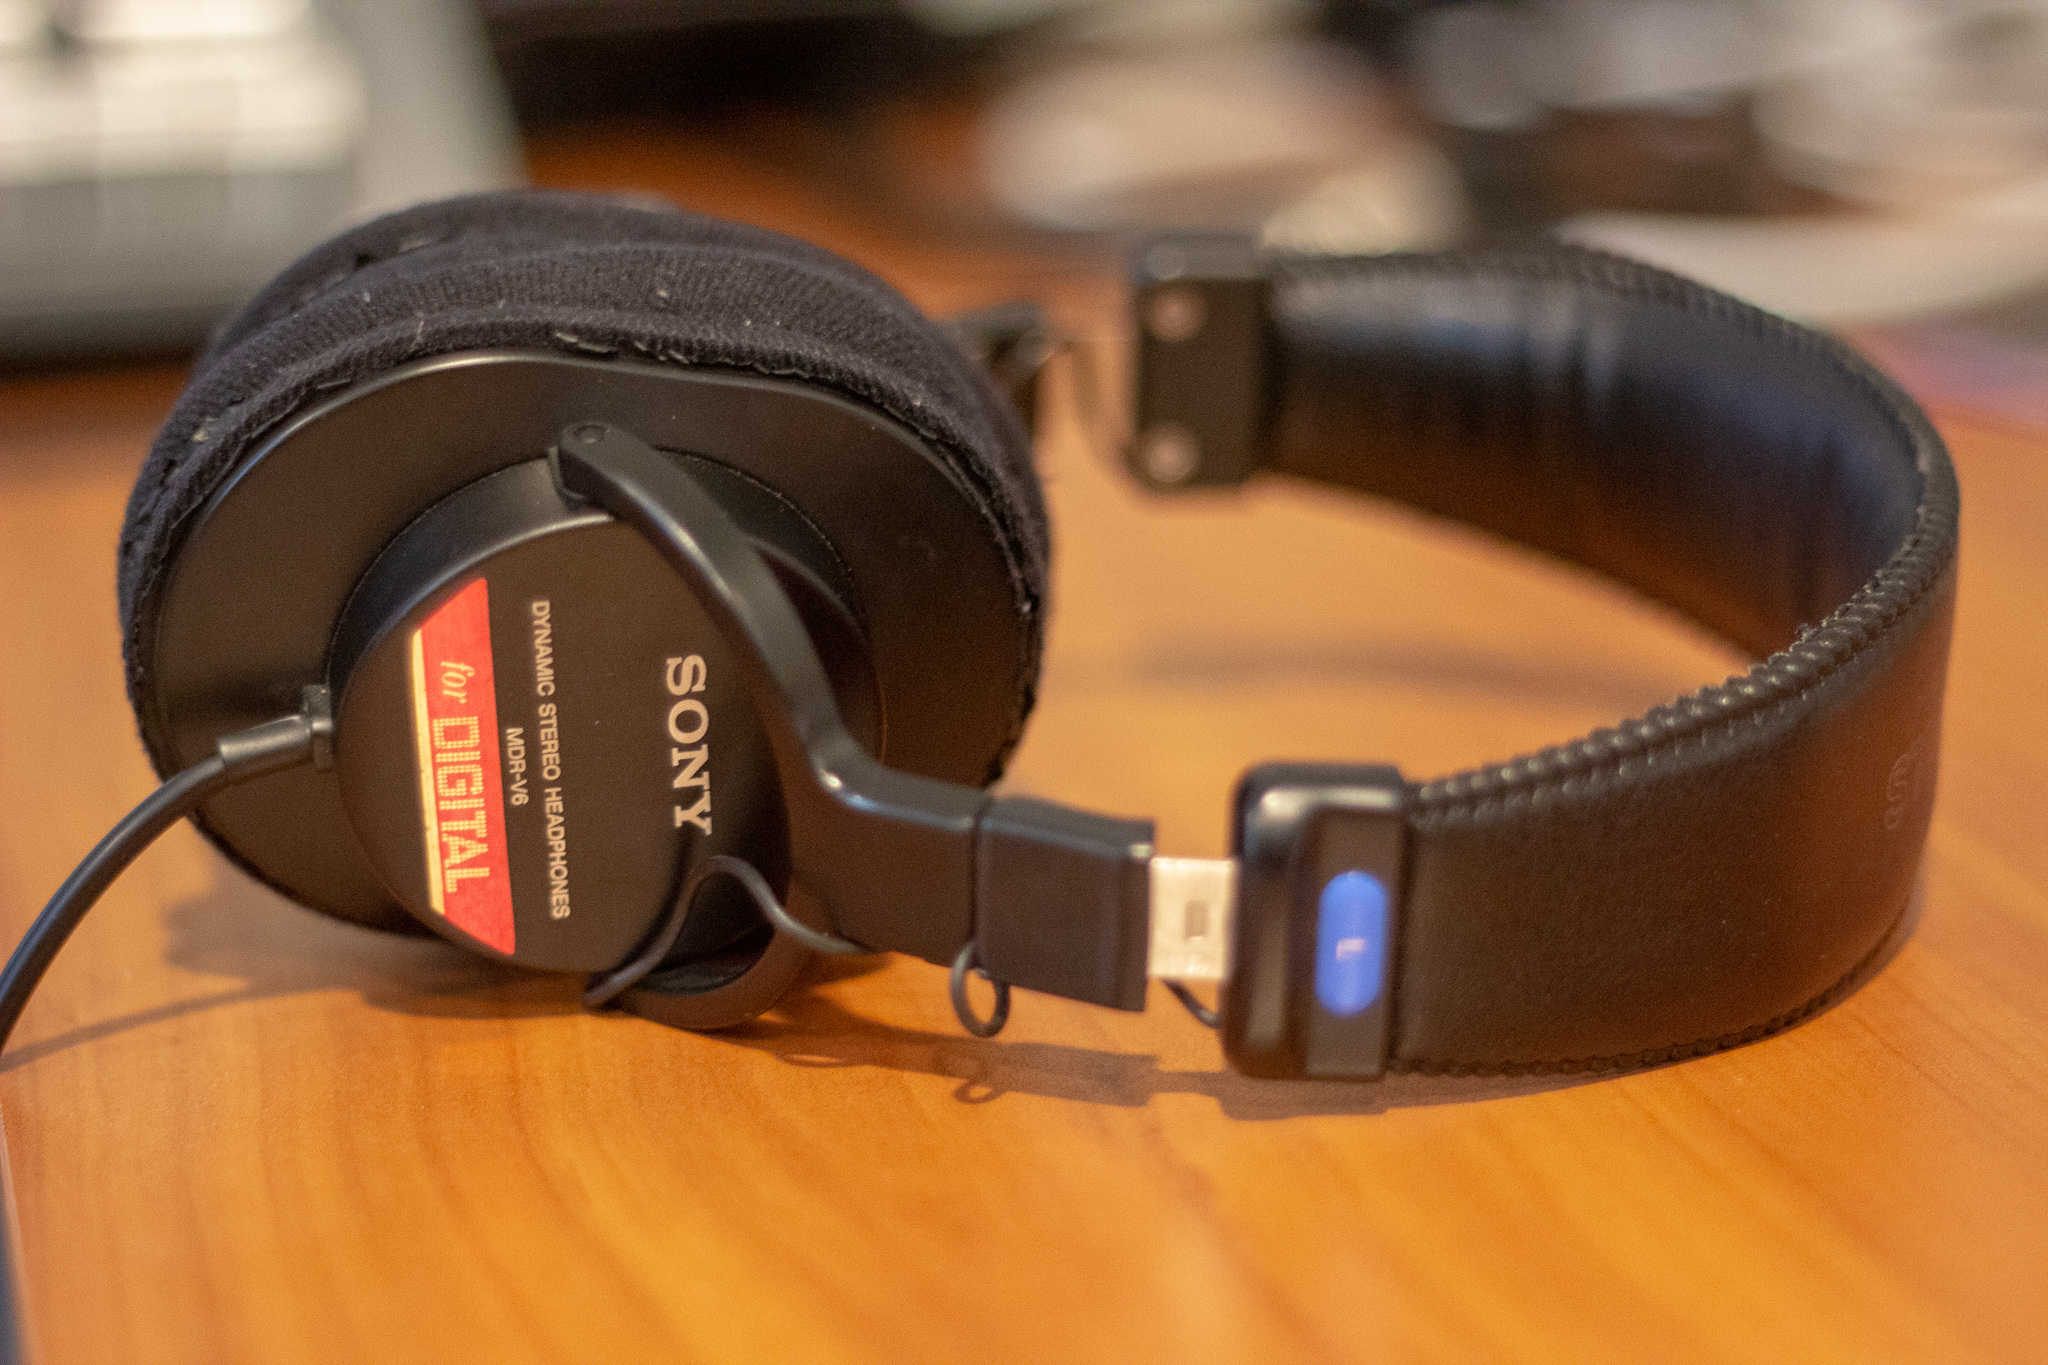 Sony MDRV6 Studio Monitor Headphones